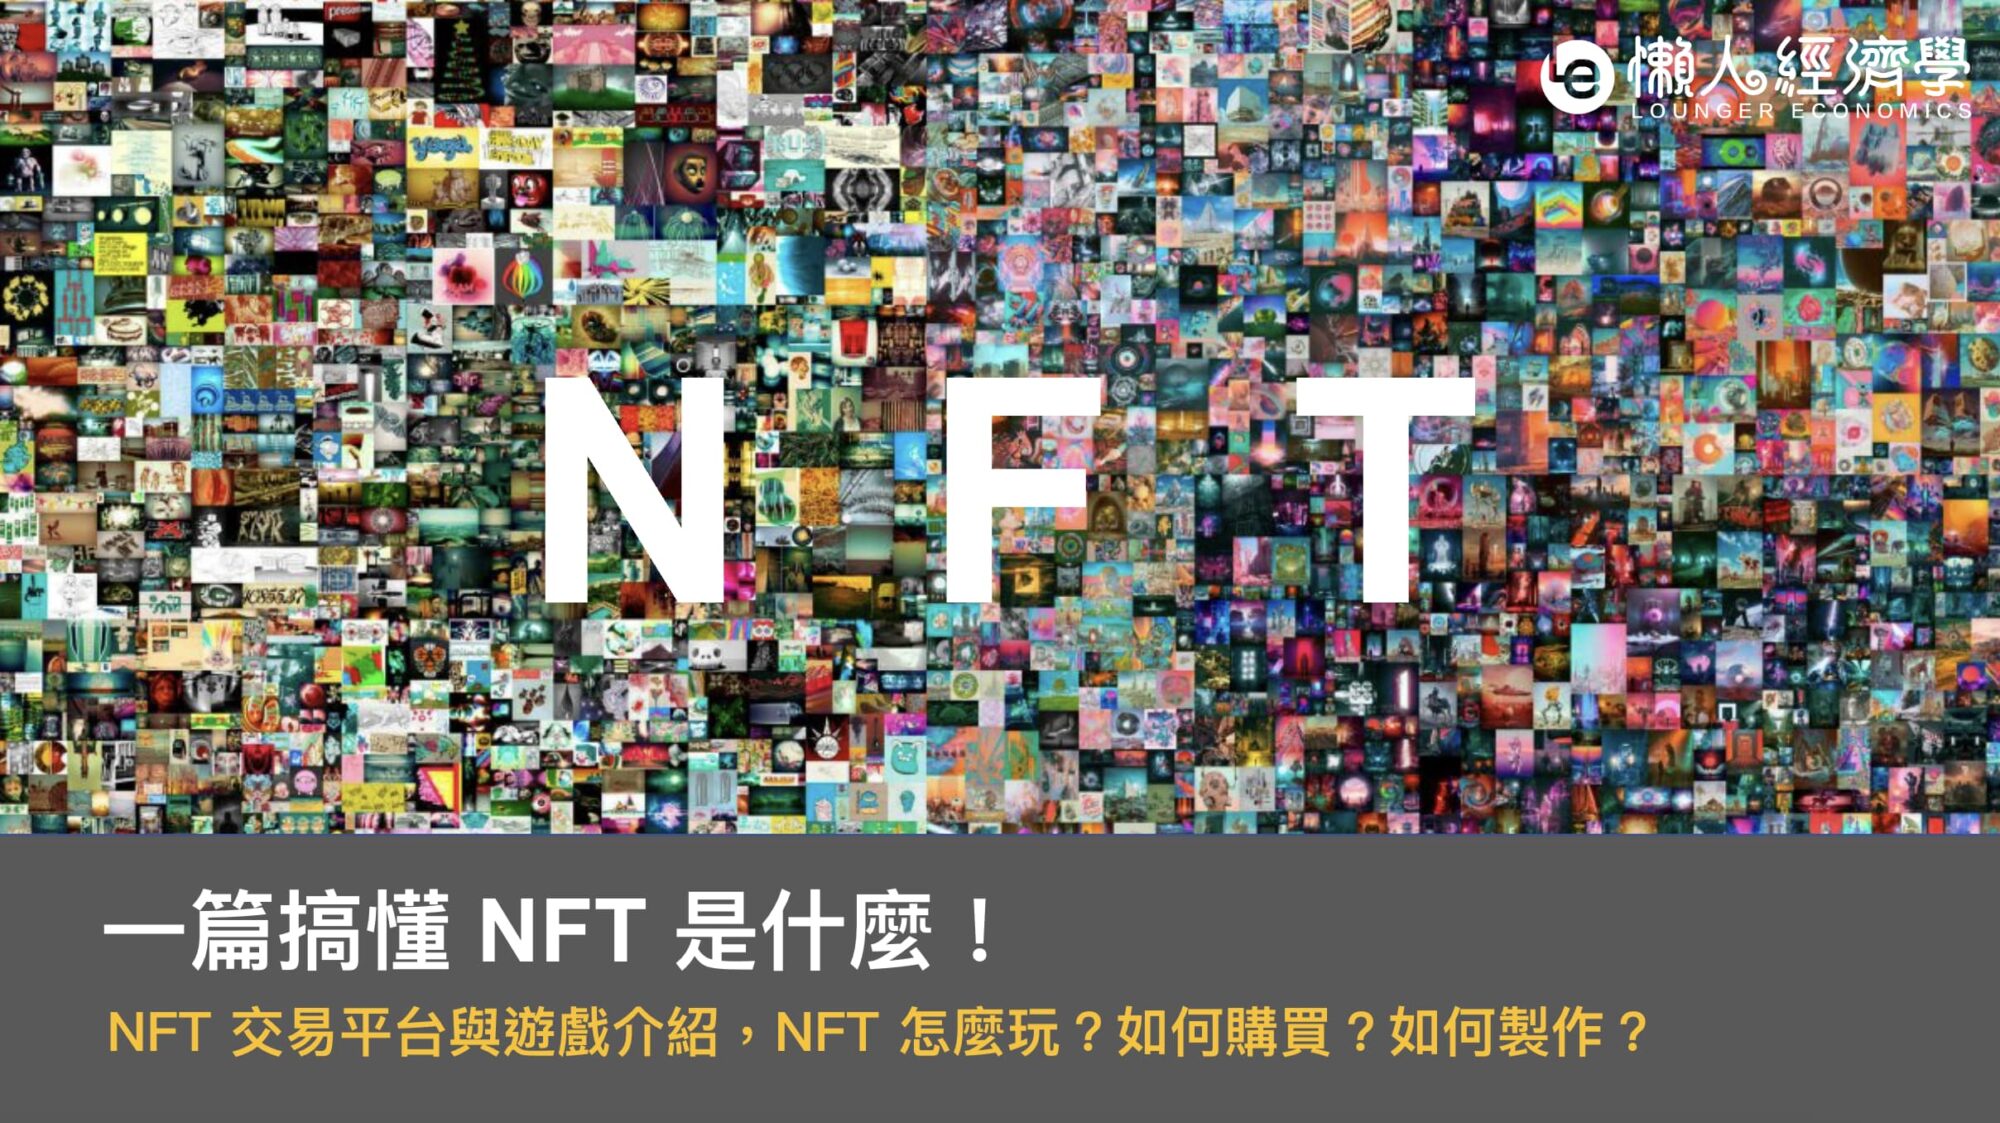 NFT 是什麼？ 新手看這篇也能懂！NFT 投資及購買全攻略